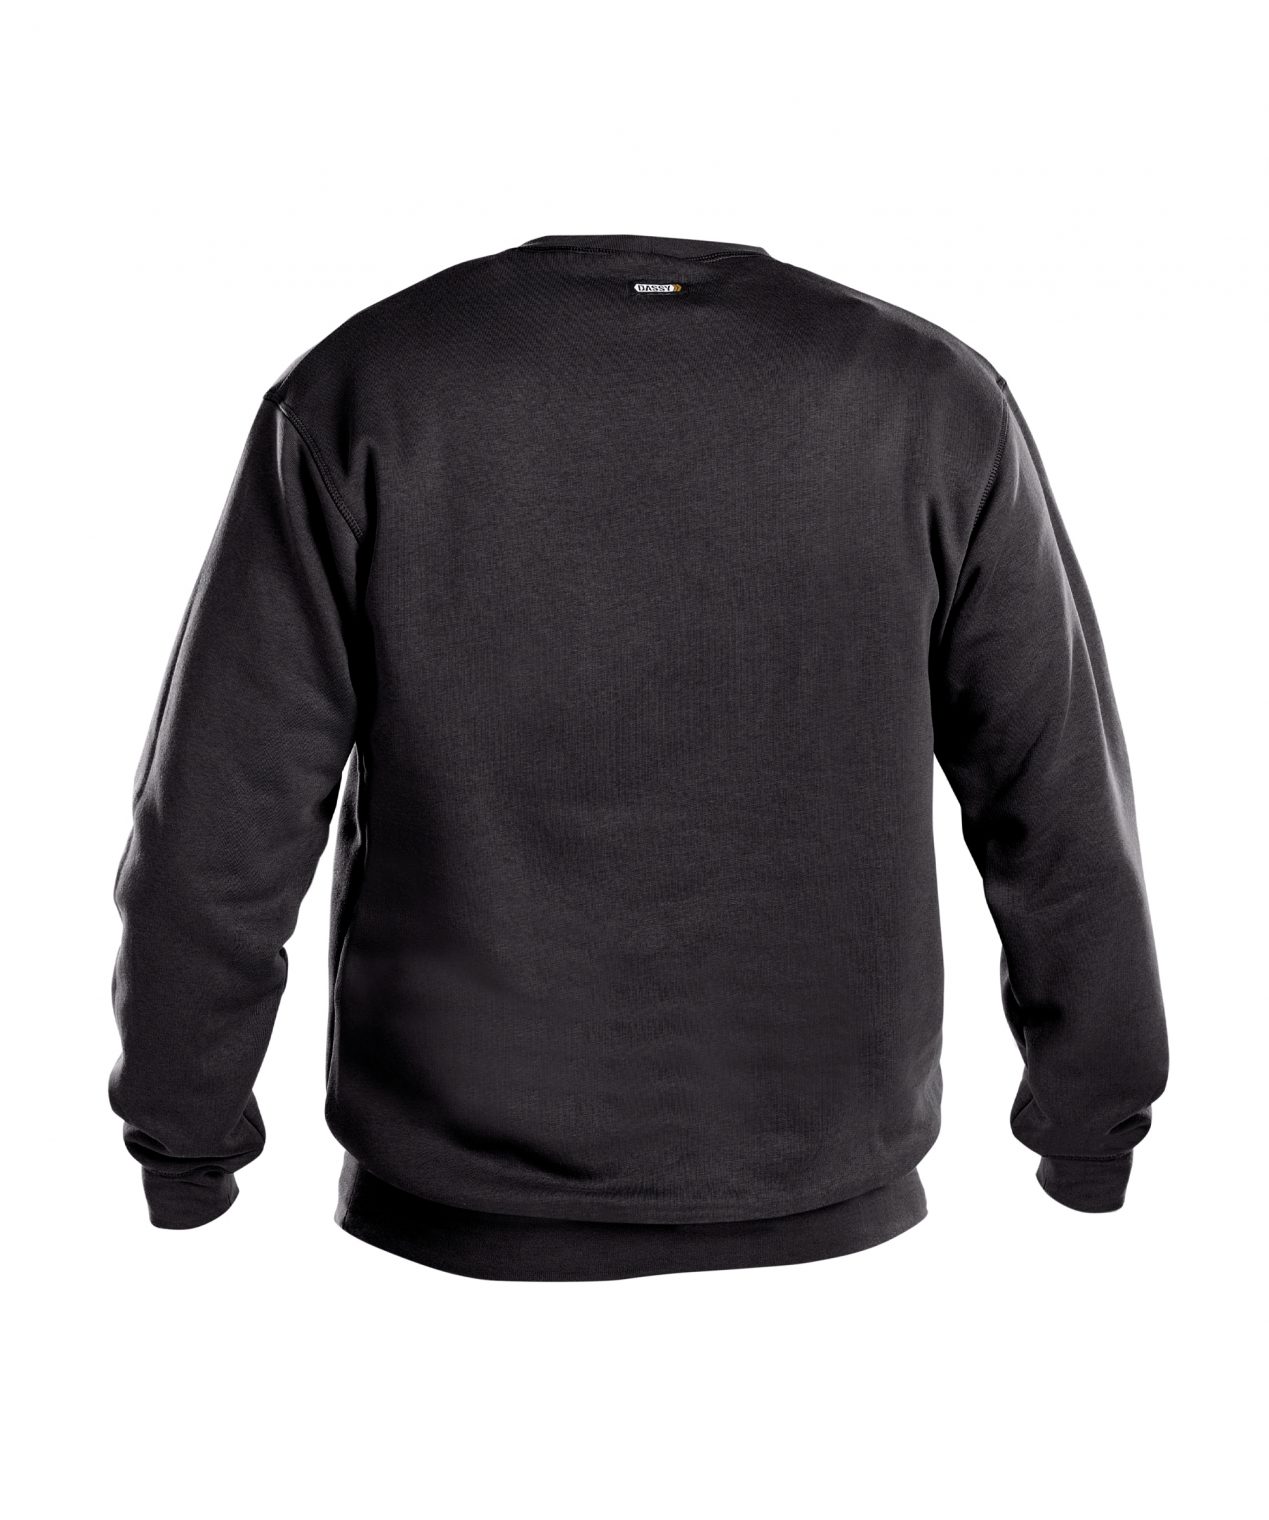 lionel sweatshirt black back